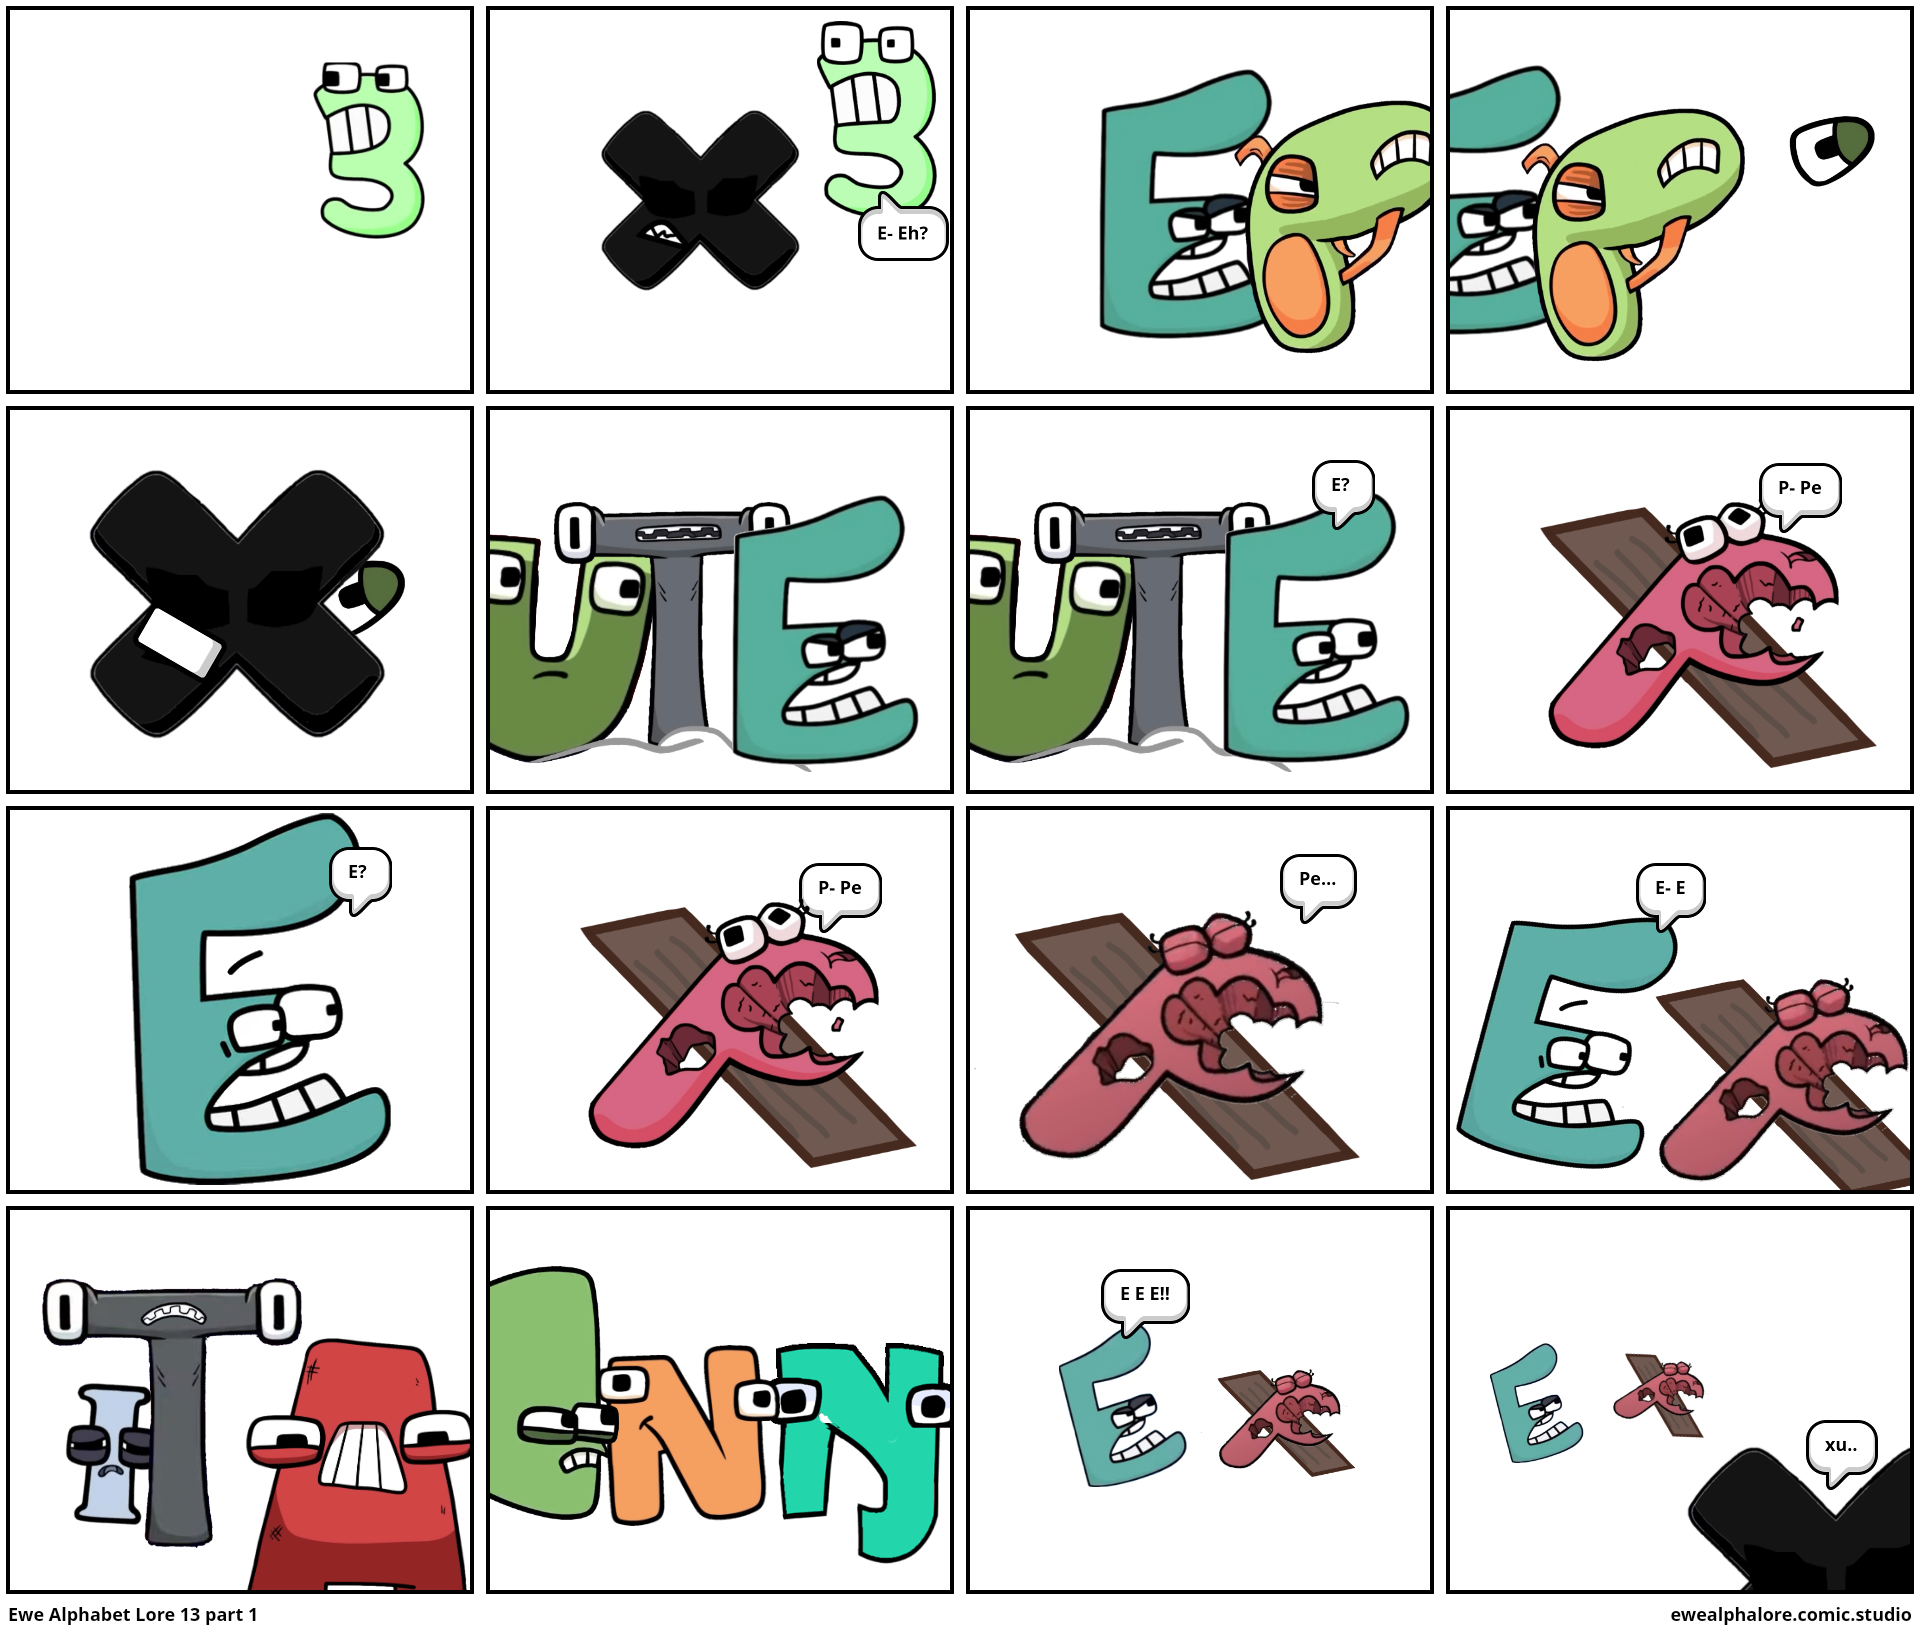 Ewe Alphabet Lore 4 - Comic Studio